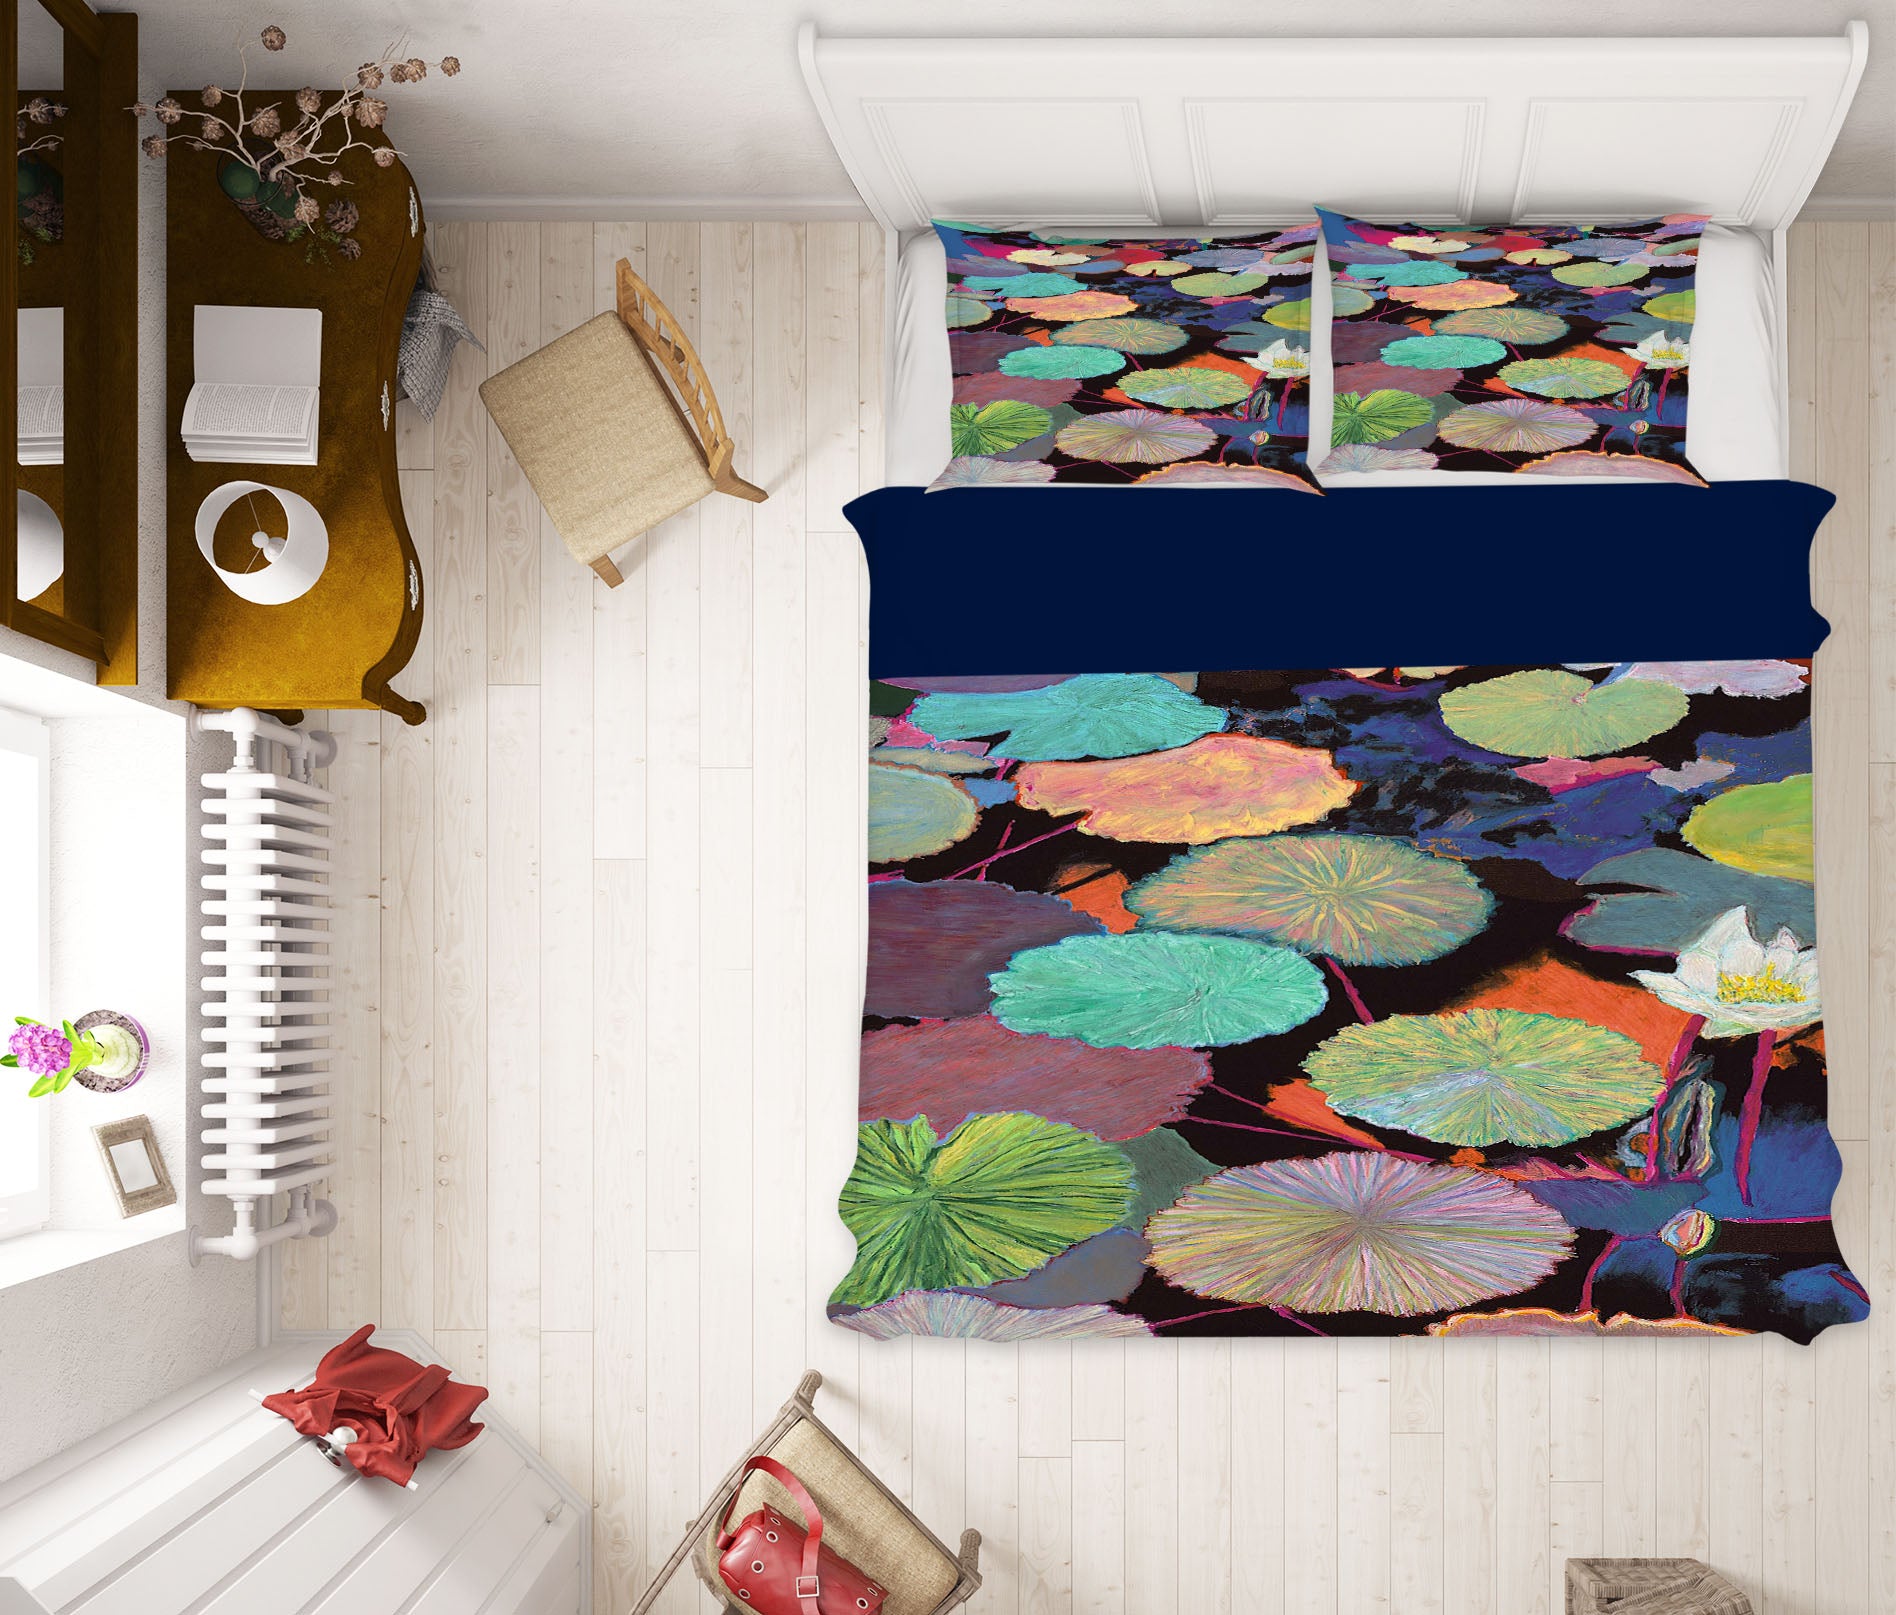 3D Lotus Pond 1166 Allan P. Friedlander Bedding Bed Pillowcases Quilt